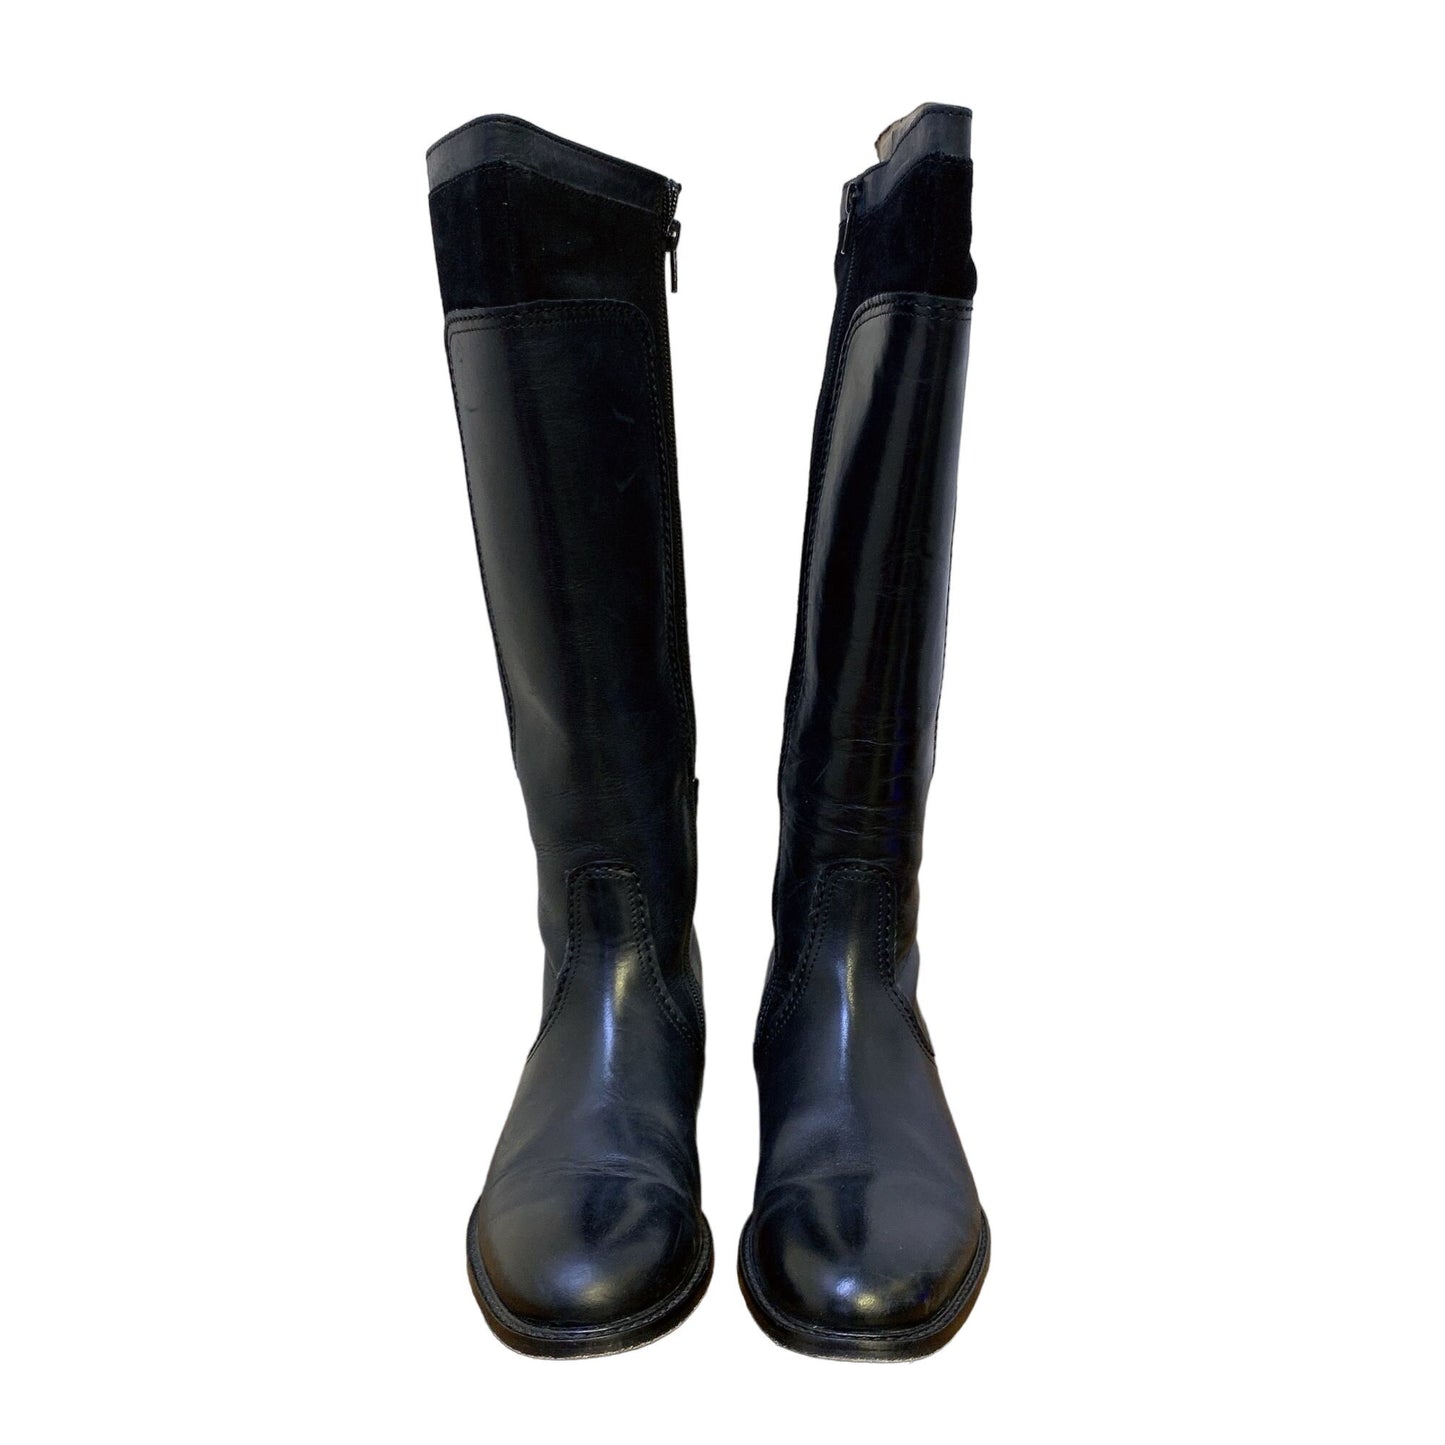 *Johnston & Murphy Black Leather Boots Size 6